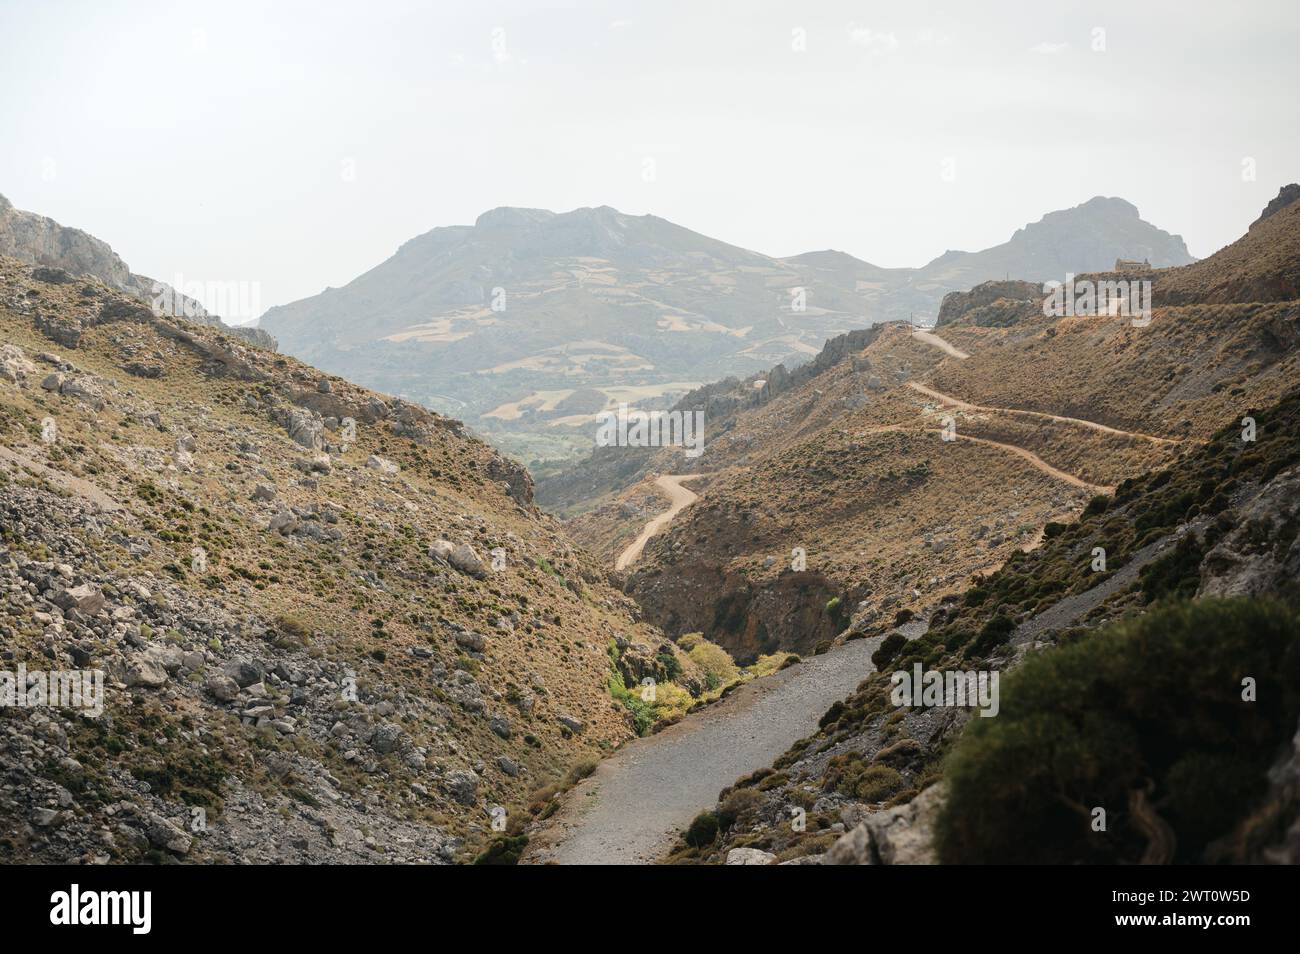 Scenic view of mountain trails in the mountains by Kourtaliotiko Gorge Stock Photo